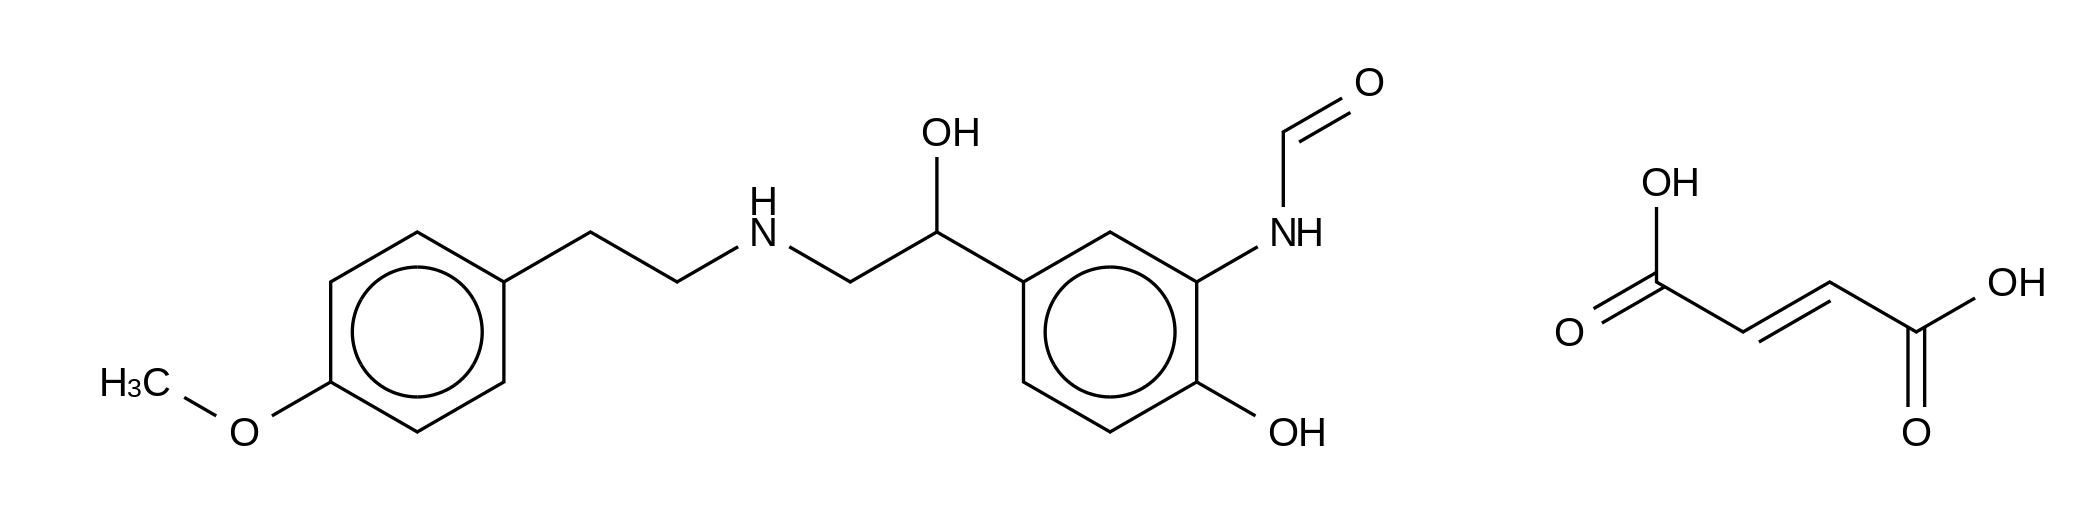 C-Demethyl Formoterol Fumarate(Mixture of Diastereomers)